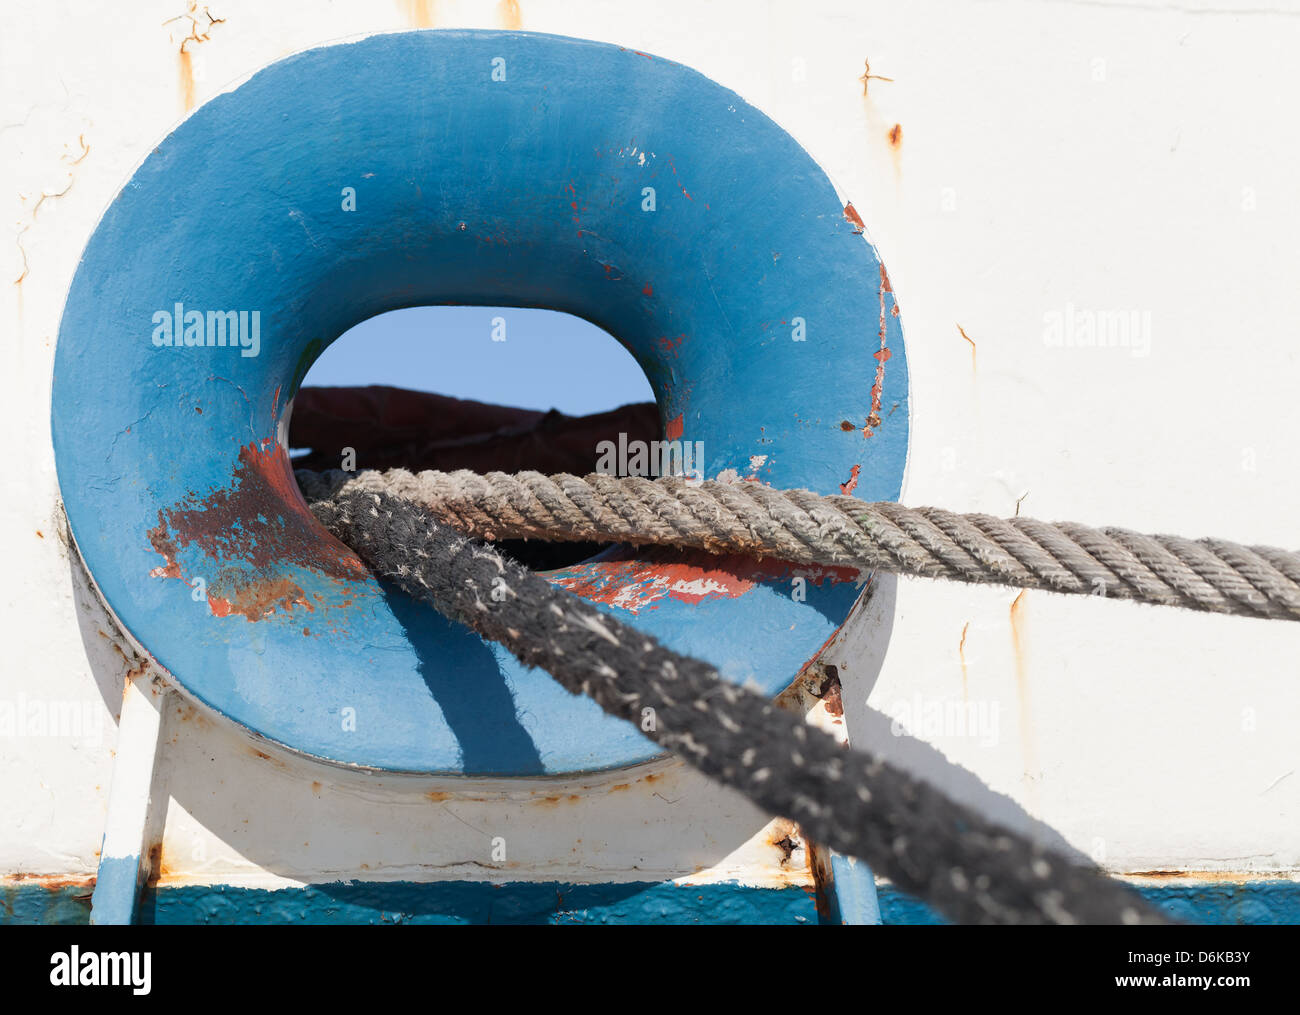 Blue ship hawse on white hull with mooring ropes Stock Photo